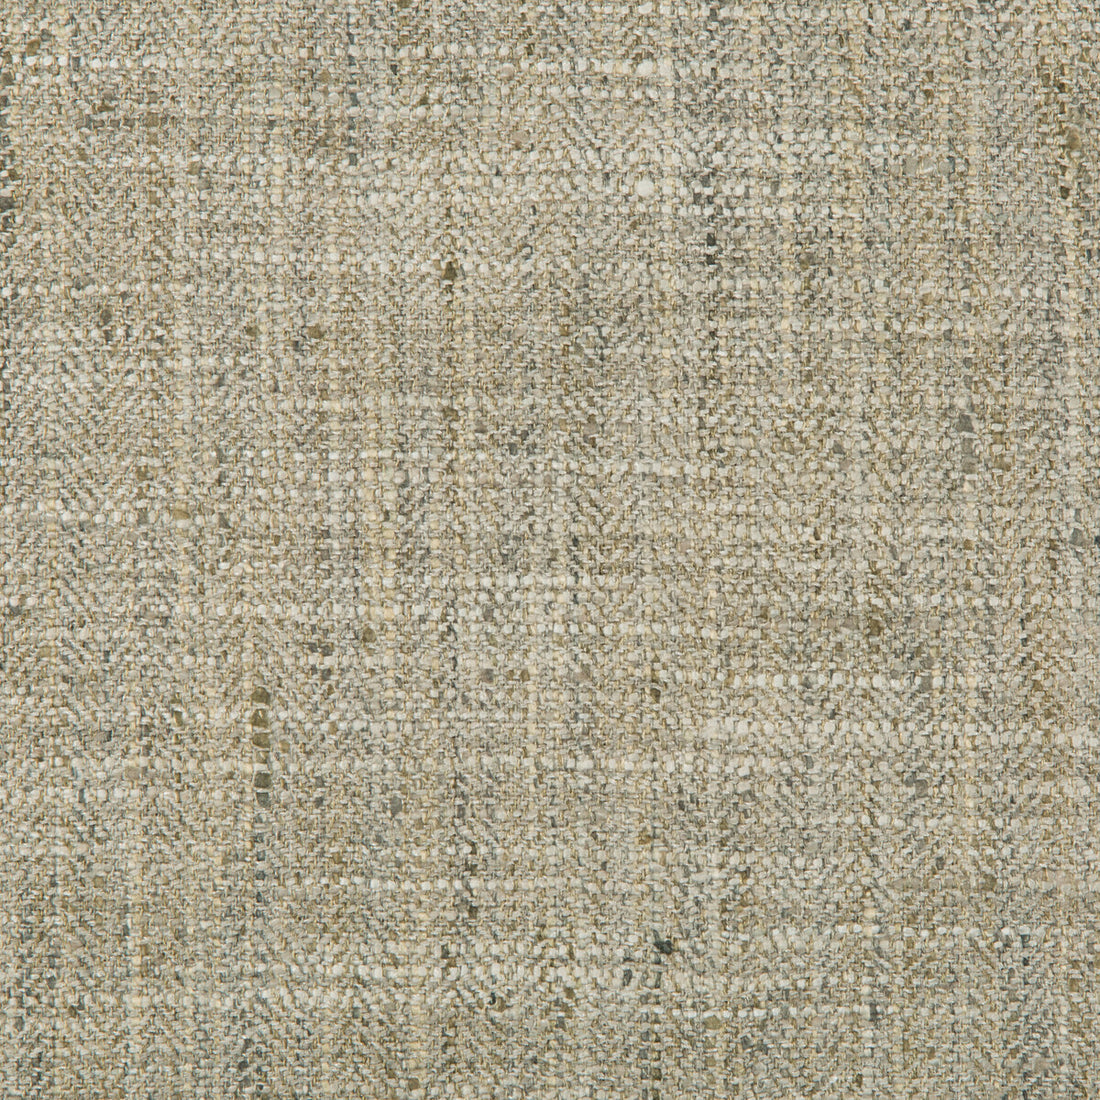 Kravet Smart fabric in 34088-1116 color - pattern 34088.1116.0 - by Kravet Smart